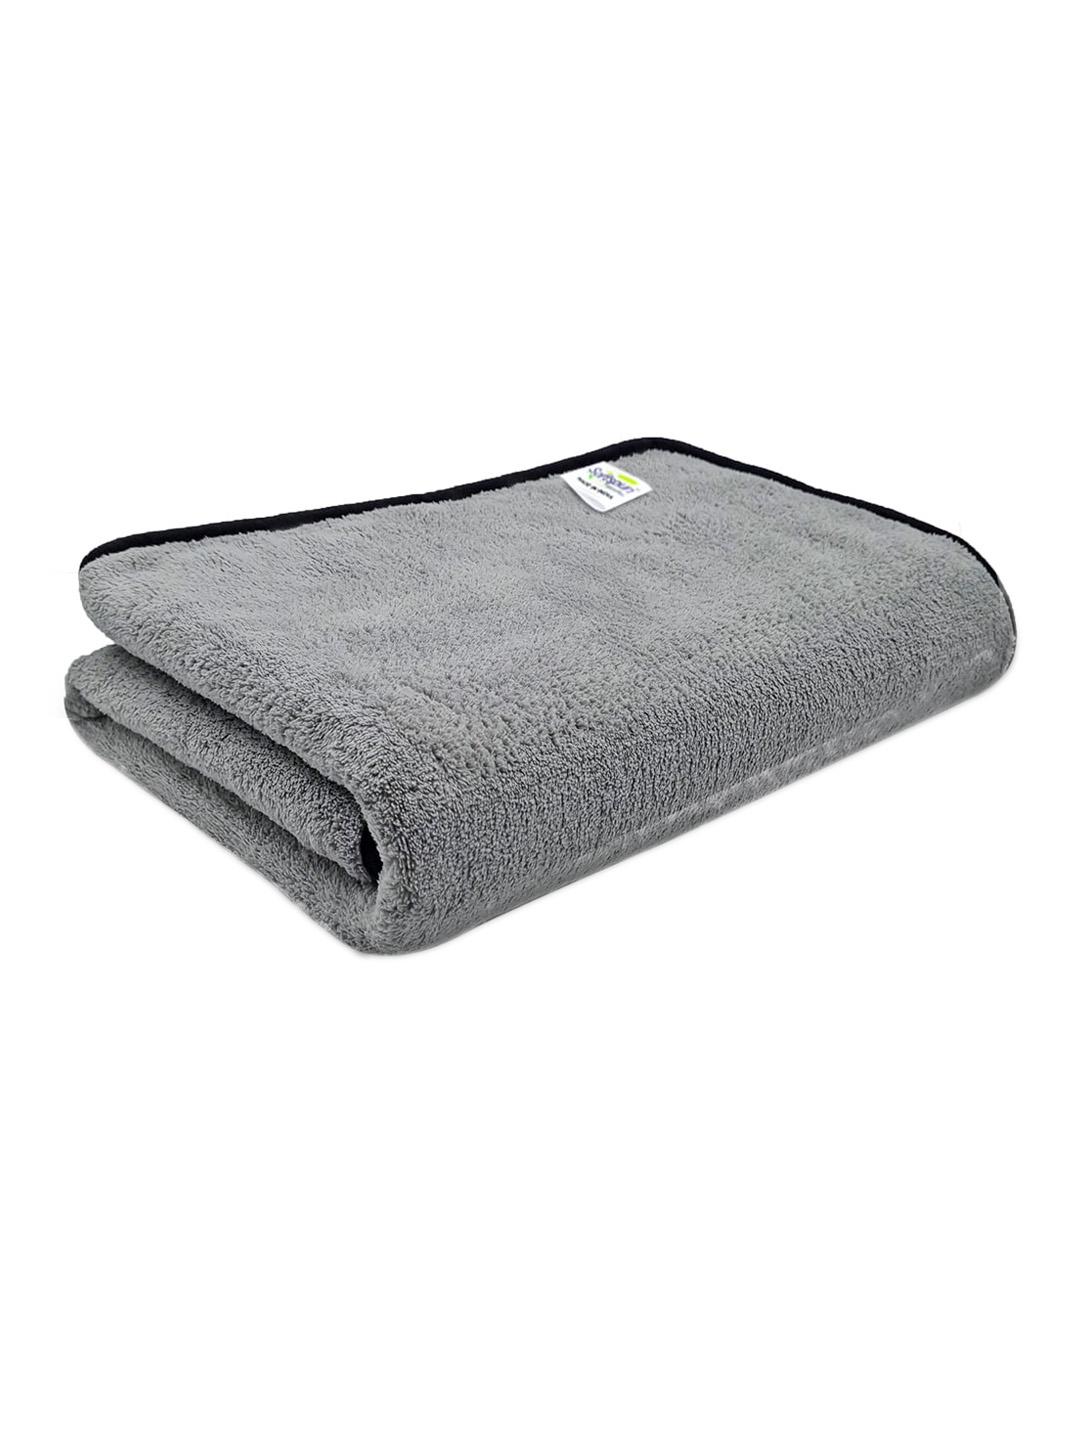 SOFTSPUN Microfiber Hair and Face Care Towel Set of 1 Piece, 340 GSM. Super  Soft 